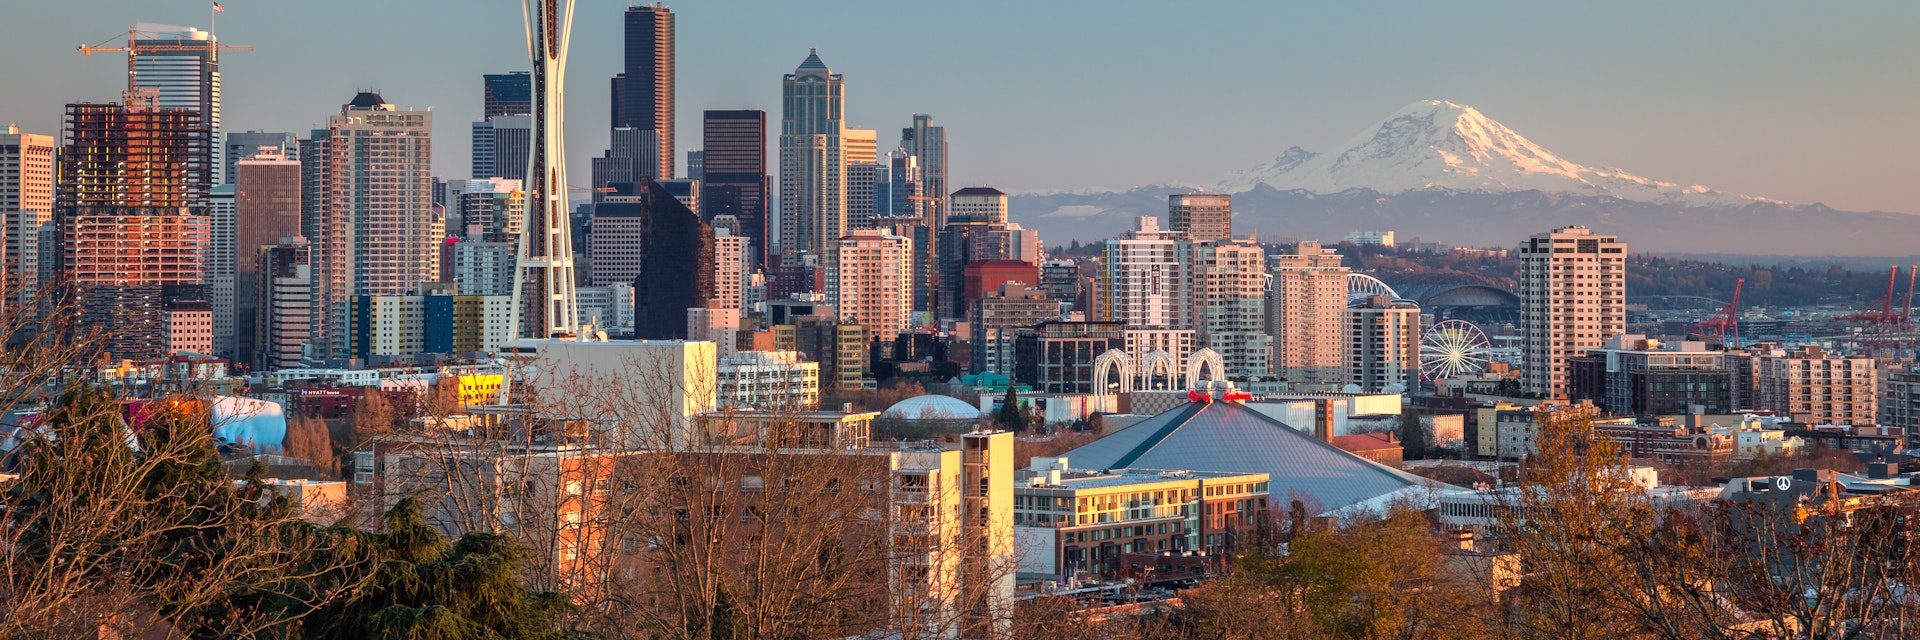 The Seattle city skyline with Mt Rainier beyond.
